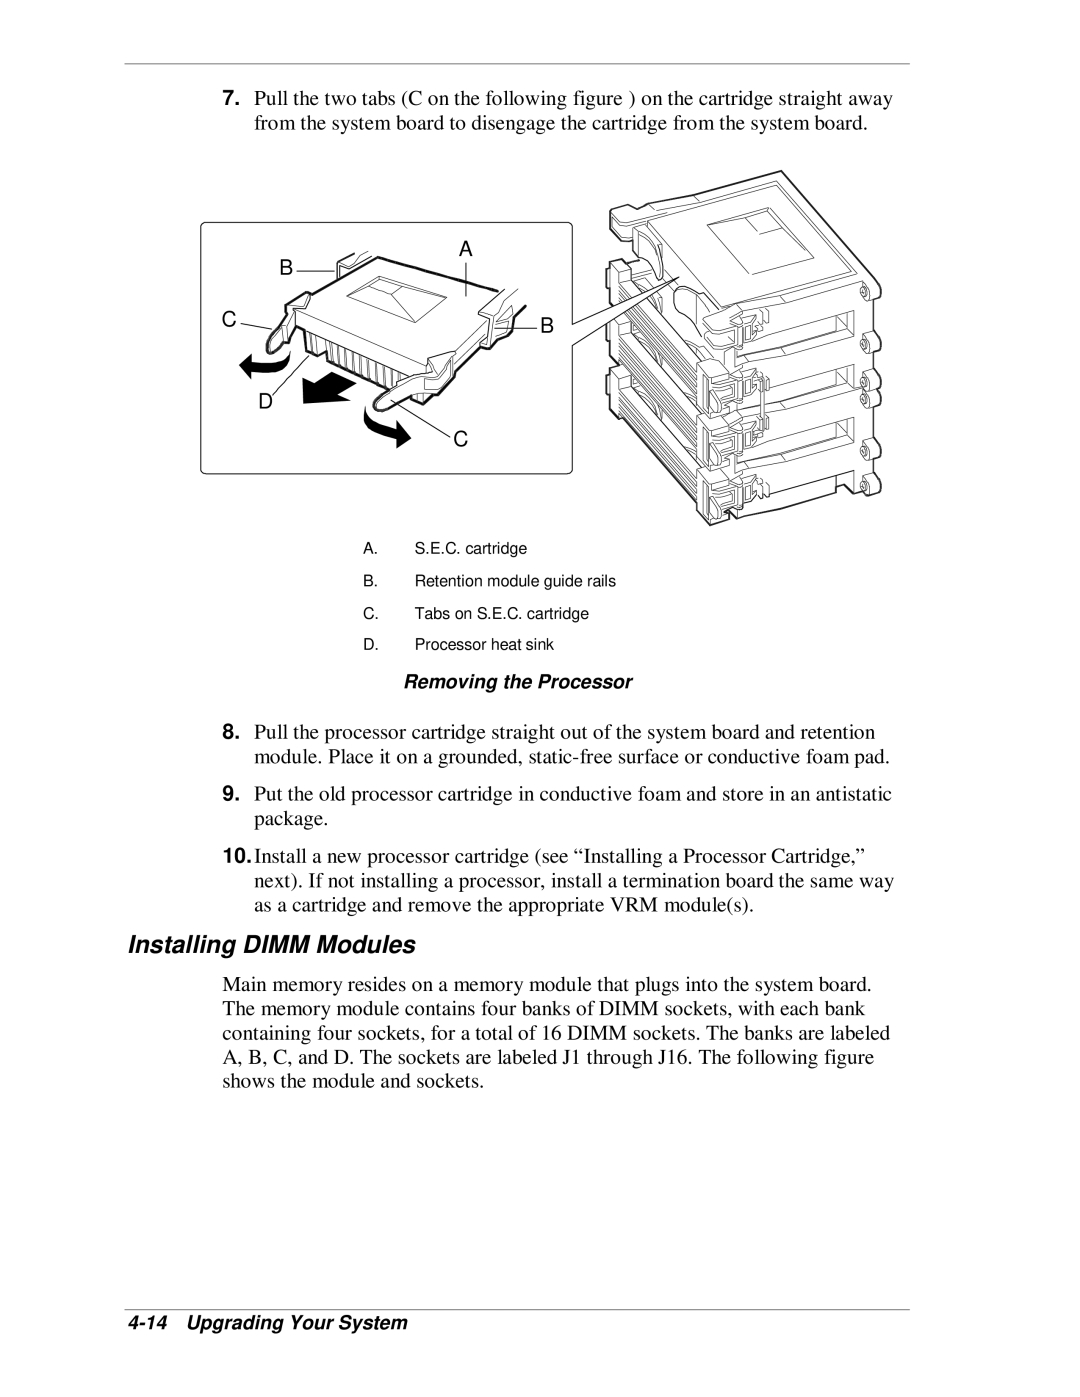 NEC MH4500 manual Installing DIMM Modules, A B C B D C 